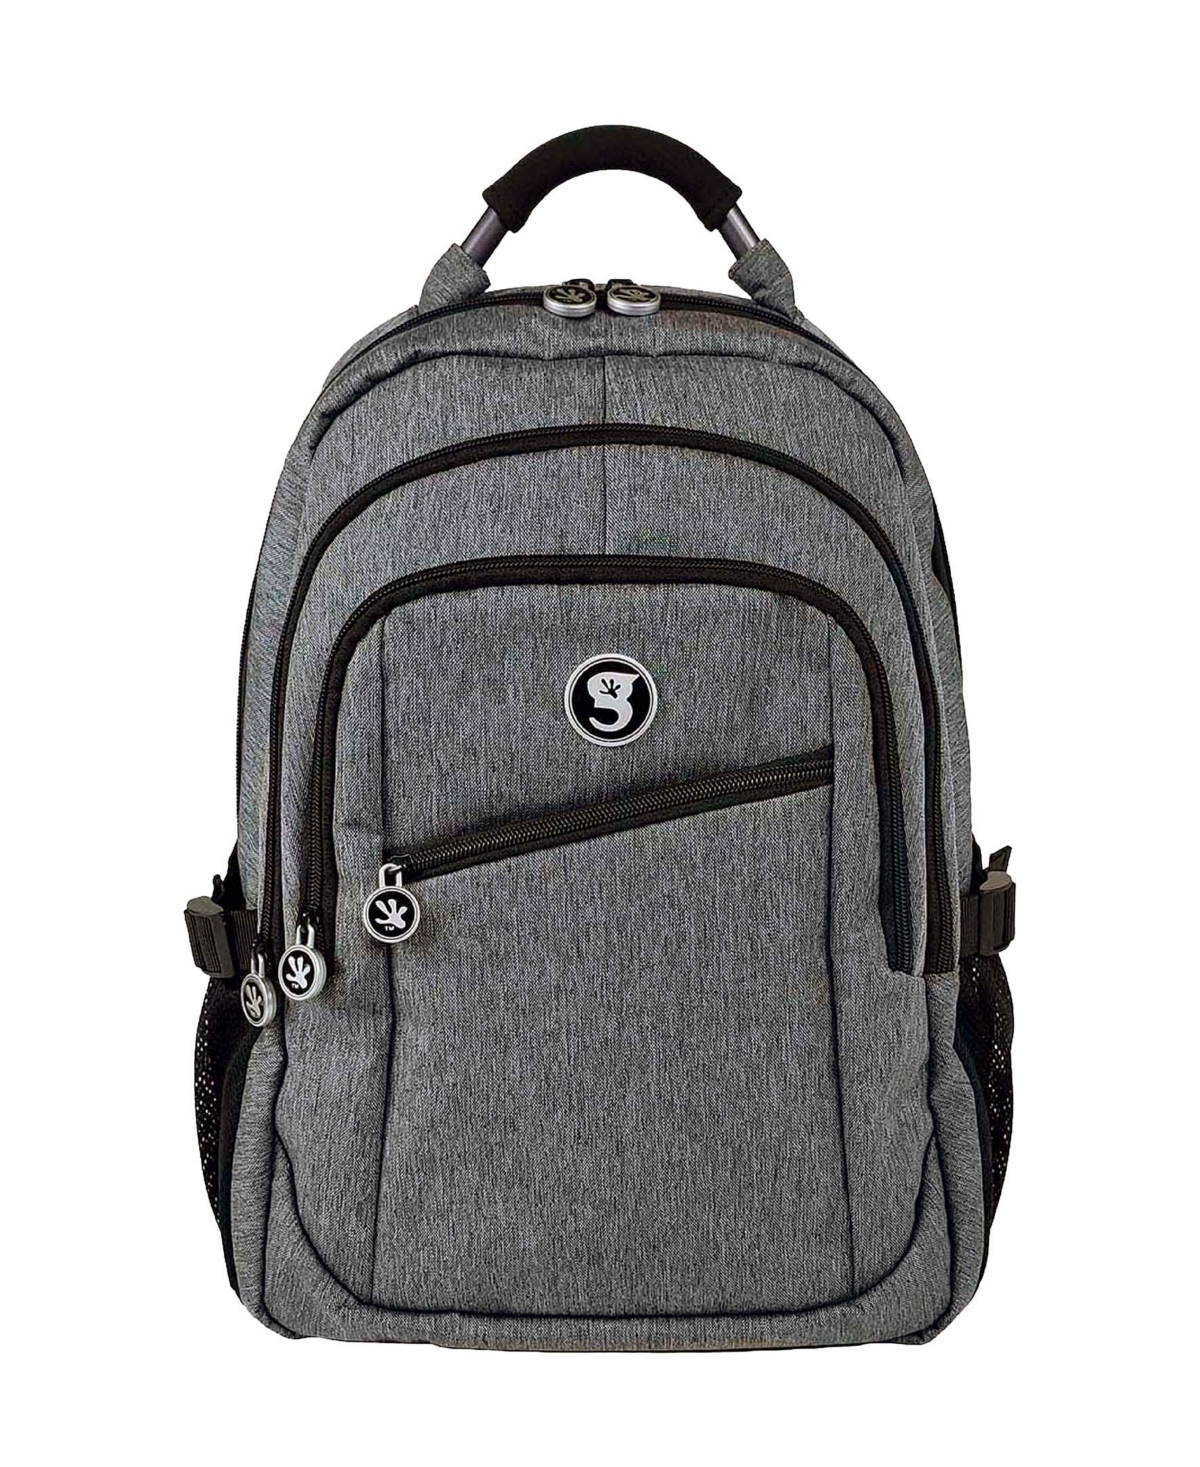 Geckobrands Elevate Backpack In Everyday Gray